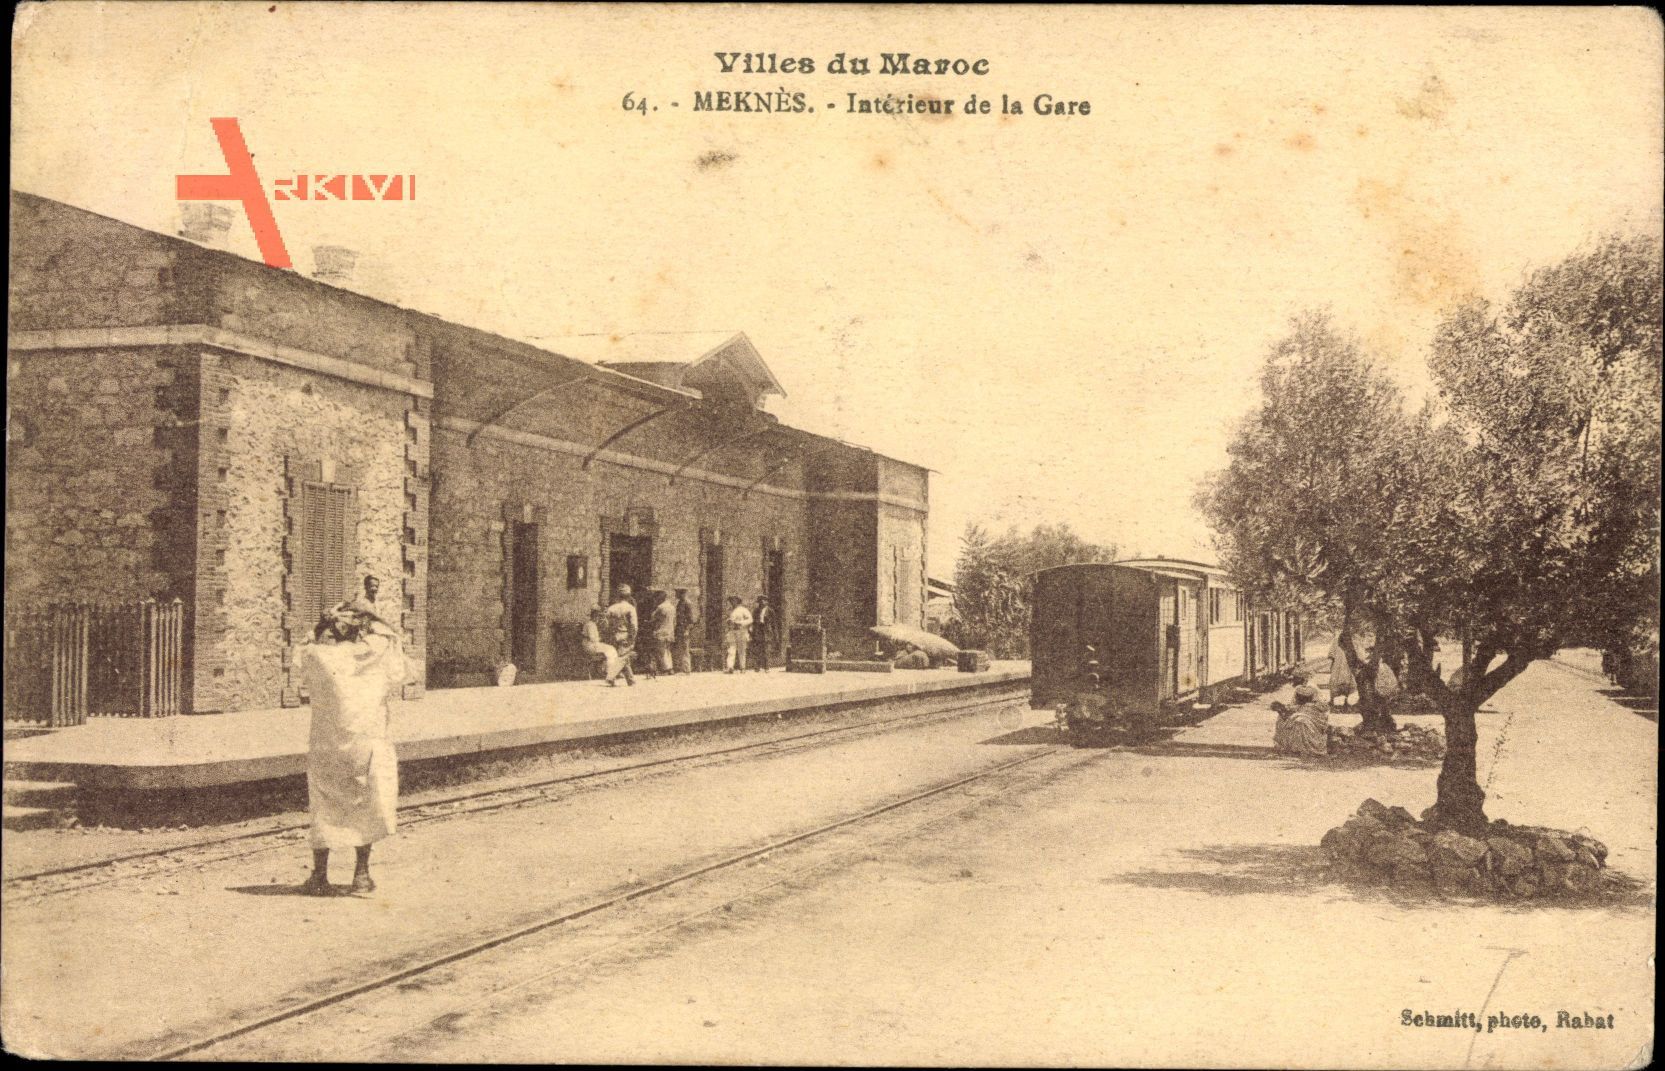 Meknès Marokko, Interieur de la Gare, Blick auf den Bahnhof, Gleisseite